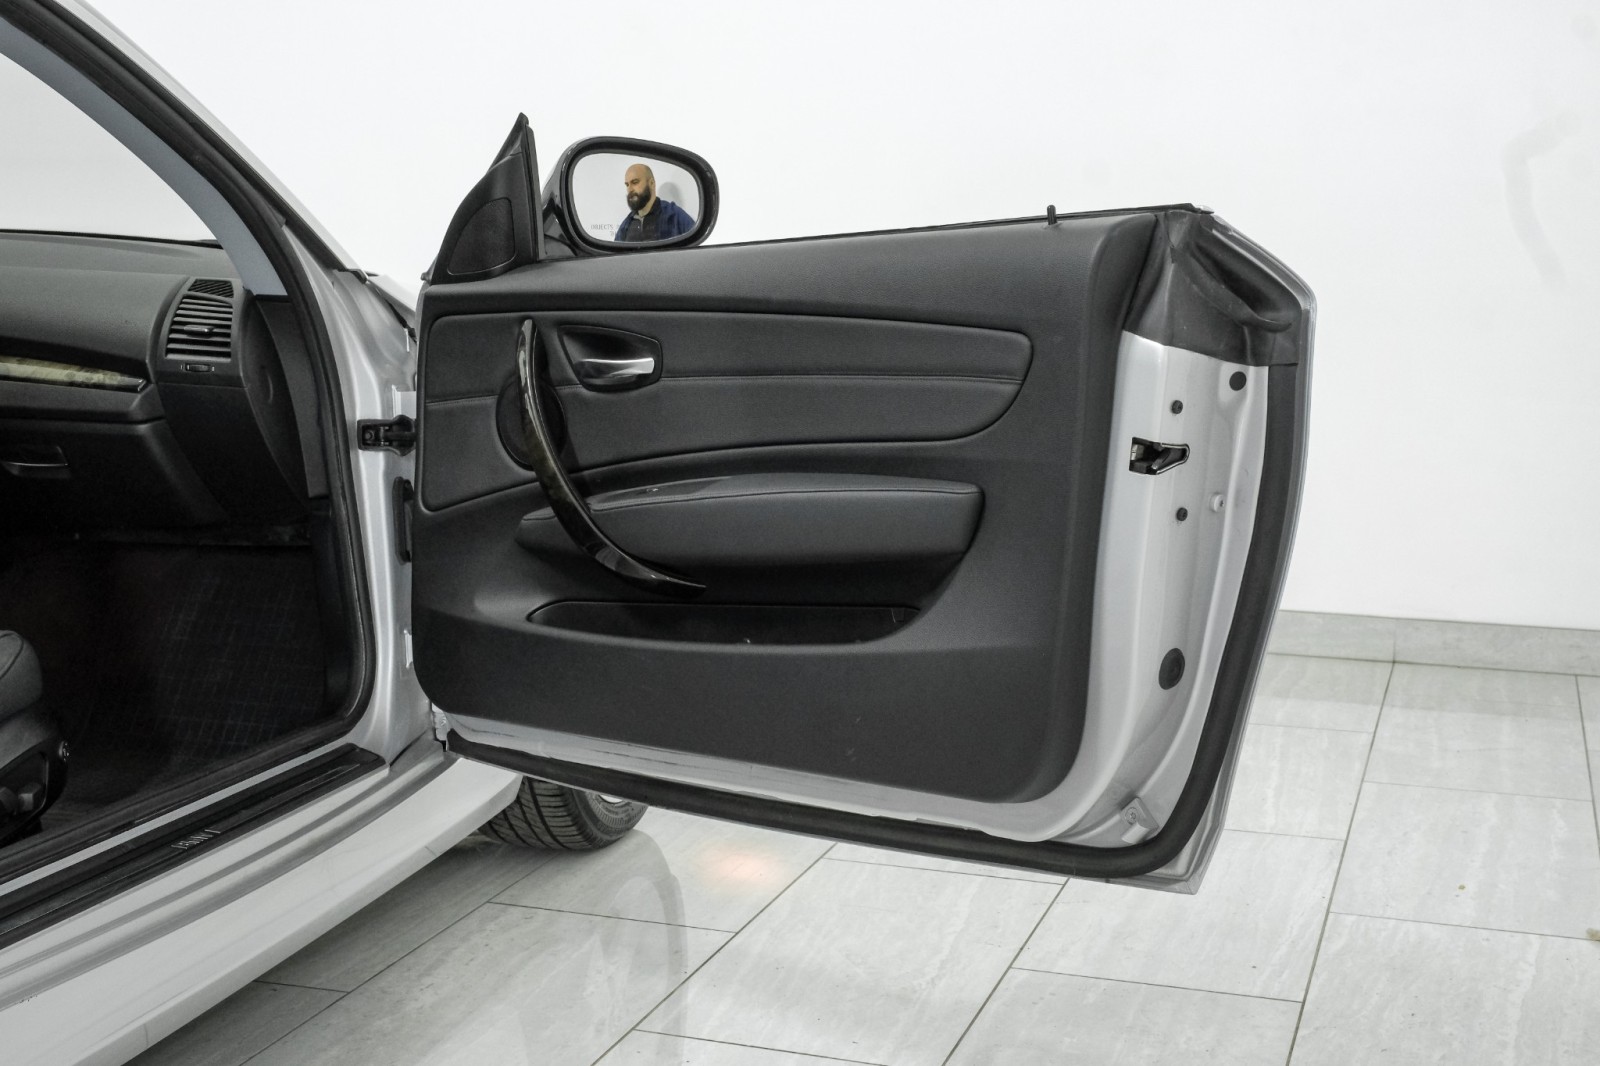 2012 BMW 128i AUTOMATIC PREMIUM PKG SUNROOF LEATHER HEATED SEATS 37